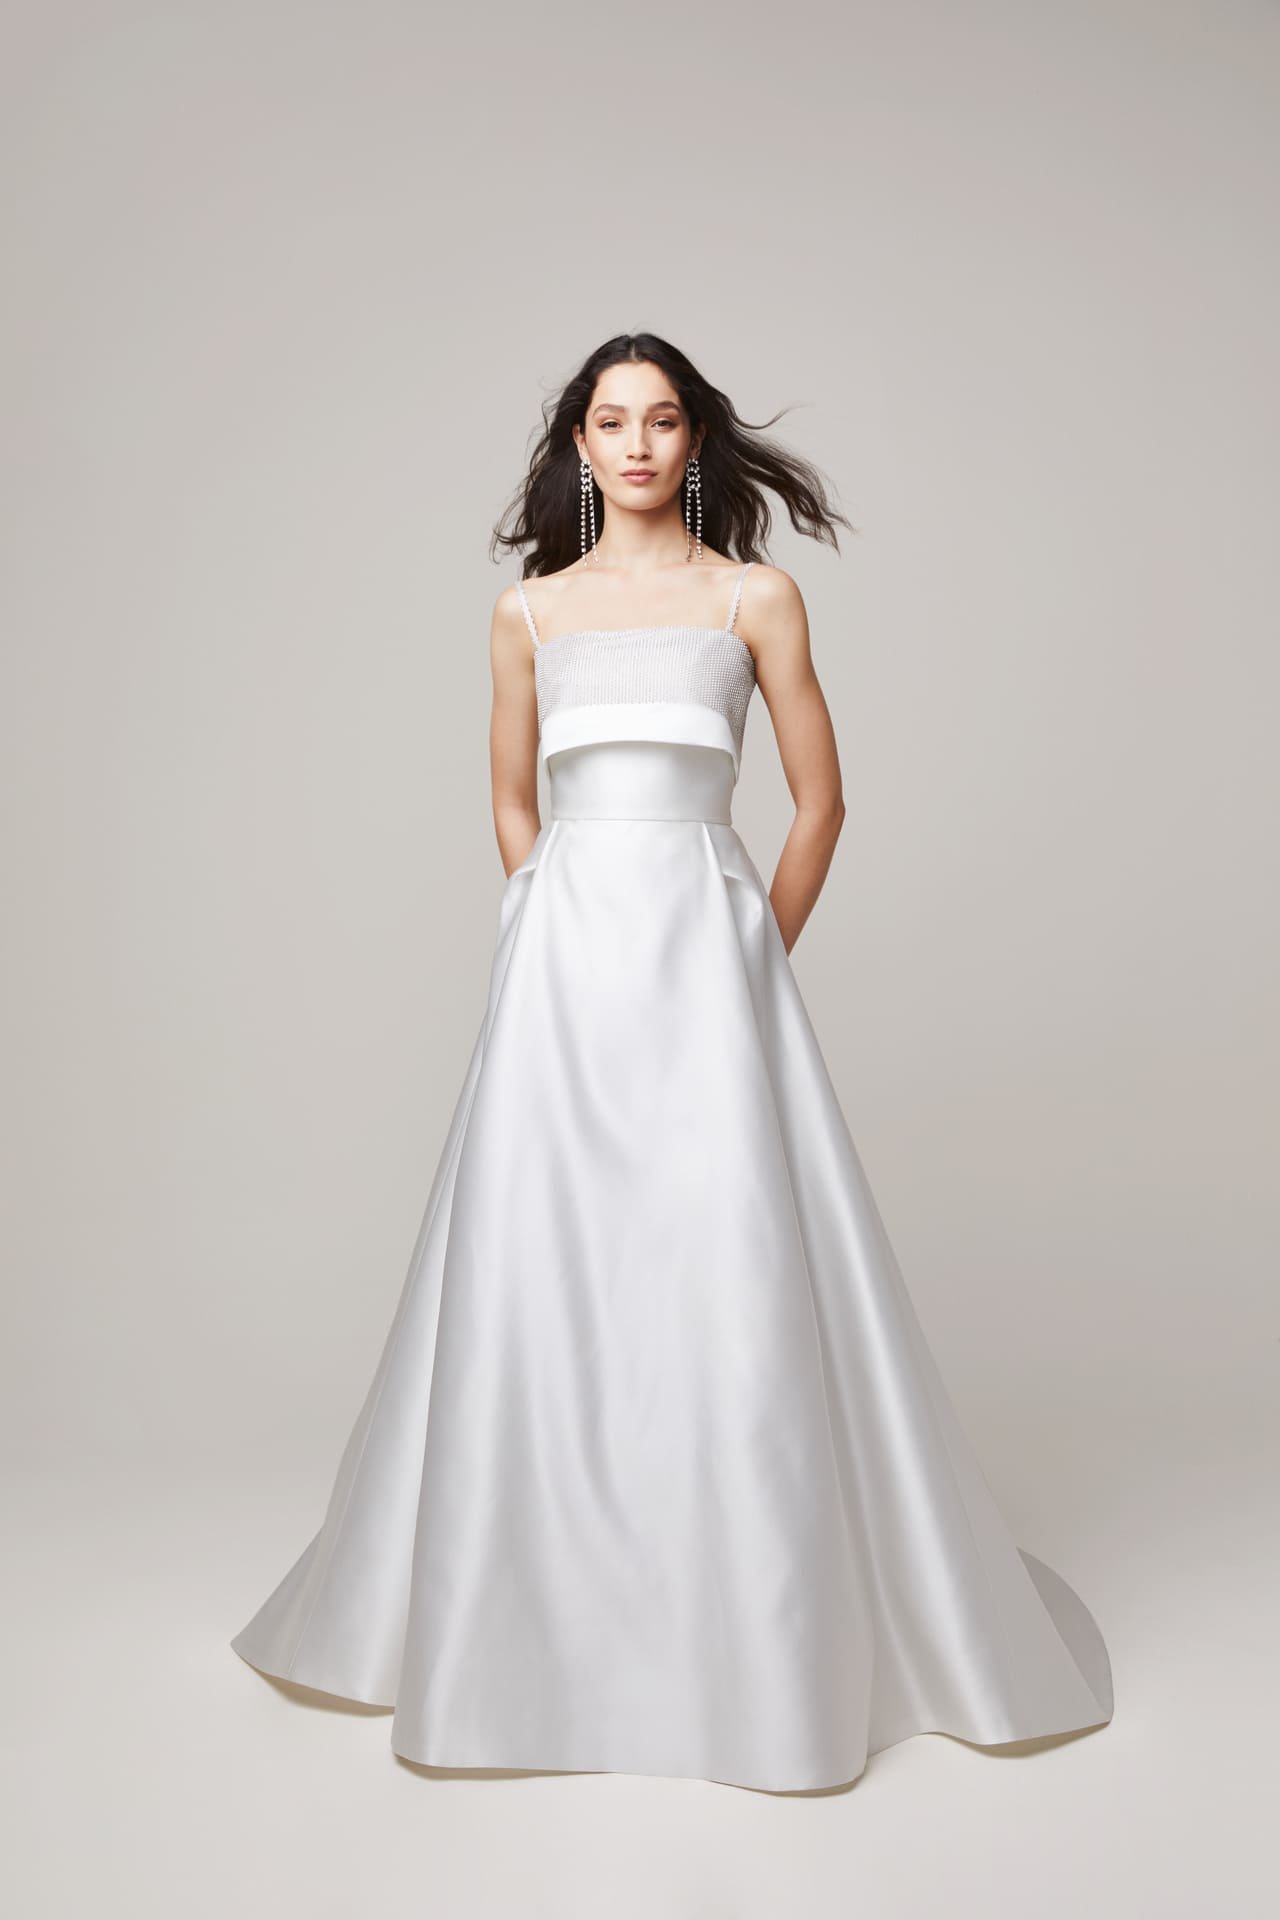 Jesus-Peiro-Wedding-Dress-2207-Front.jpg